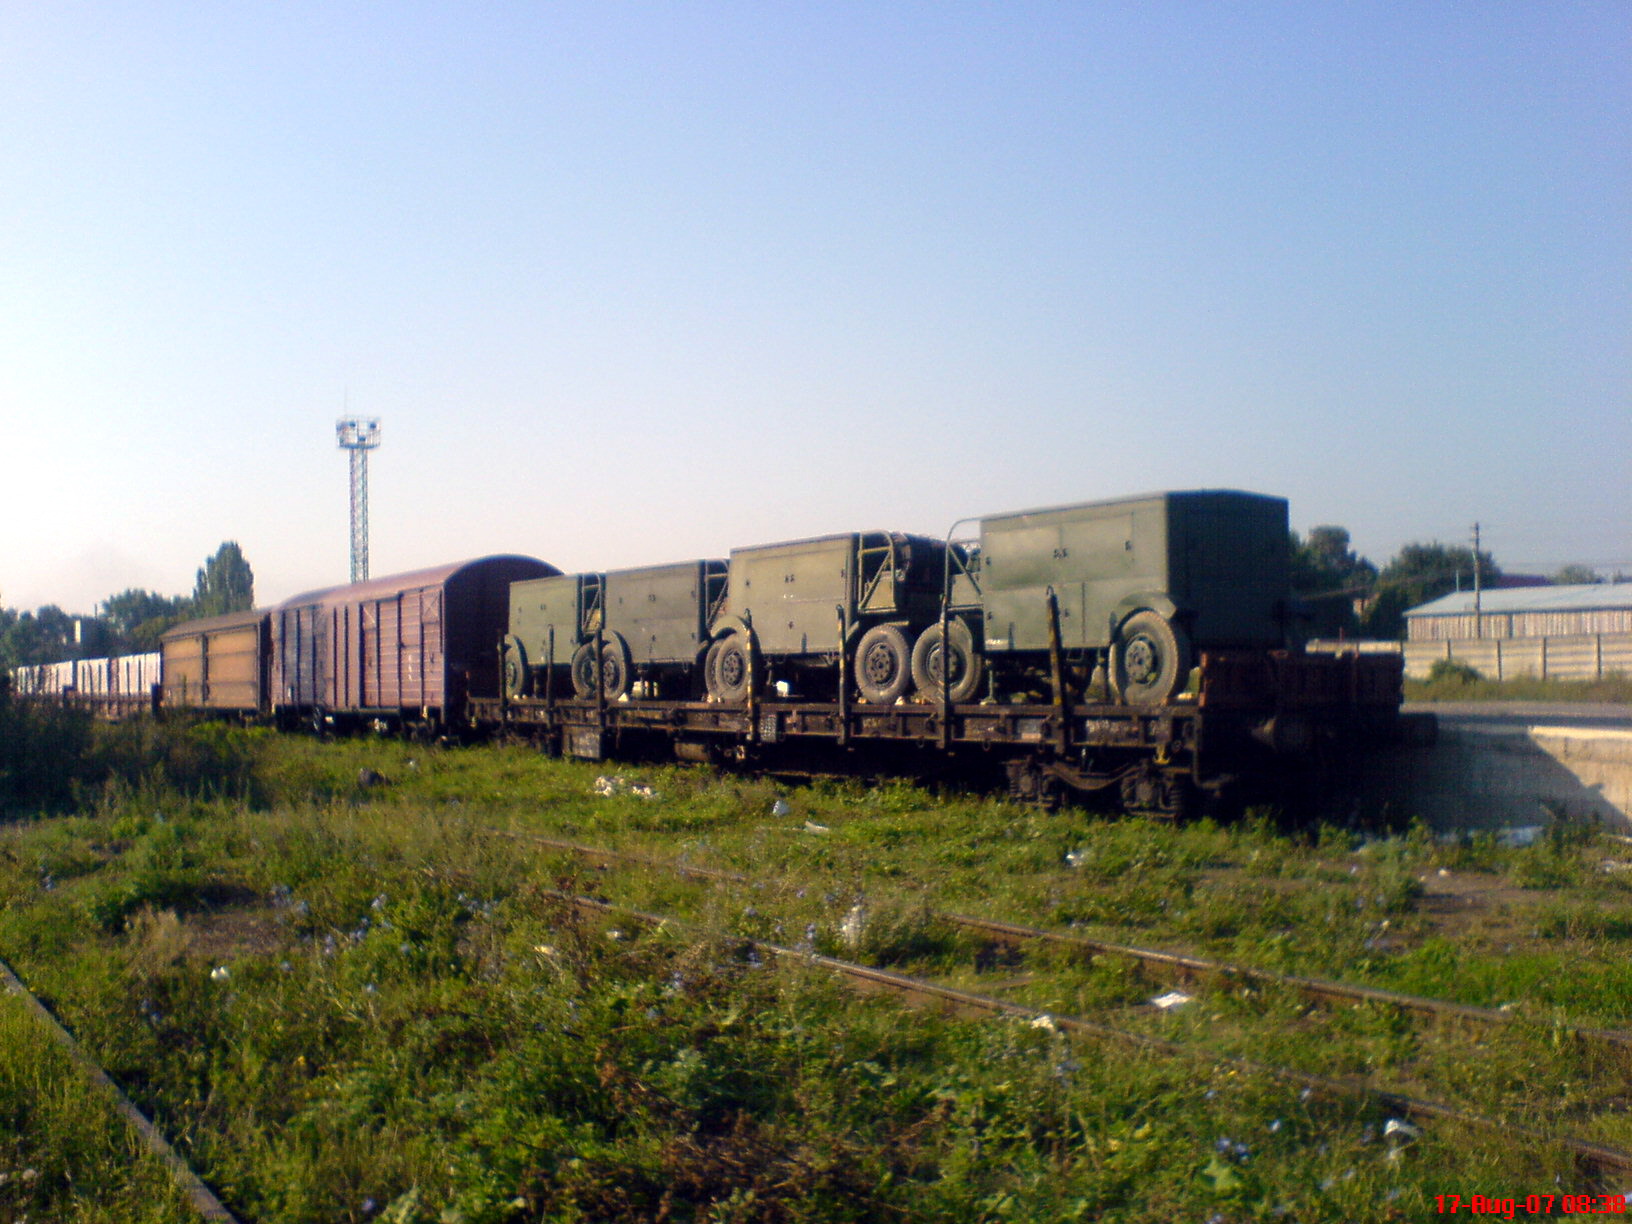 Old army train